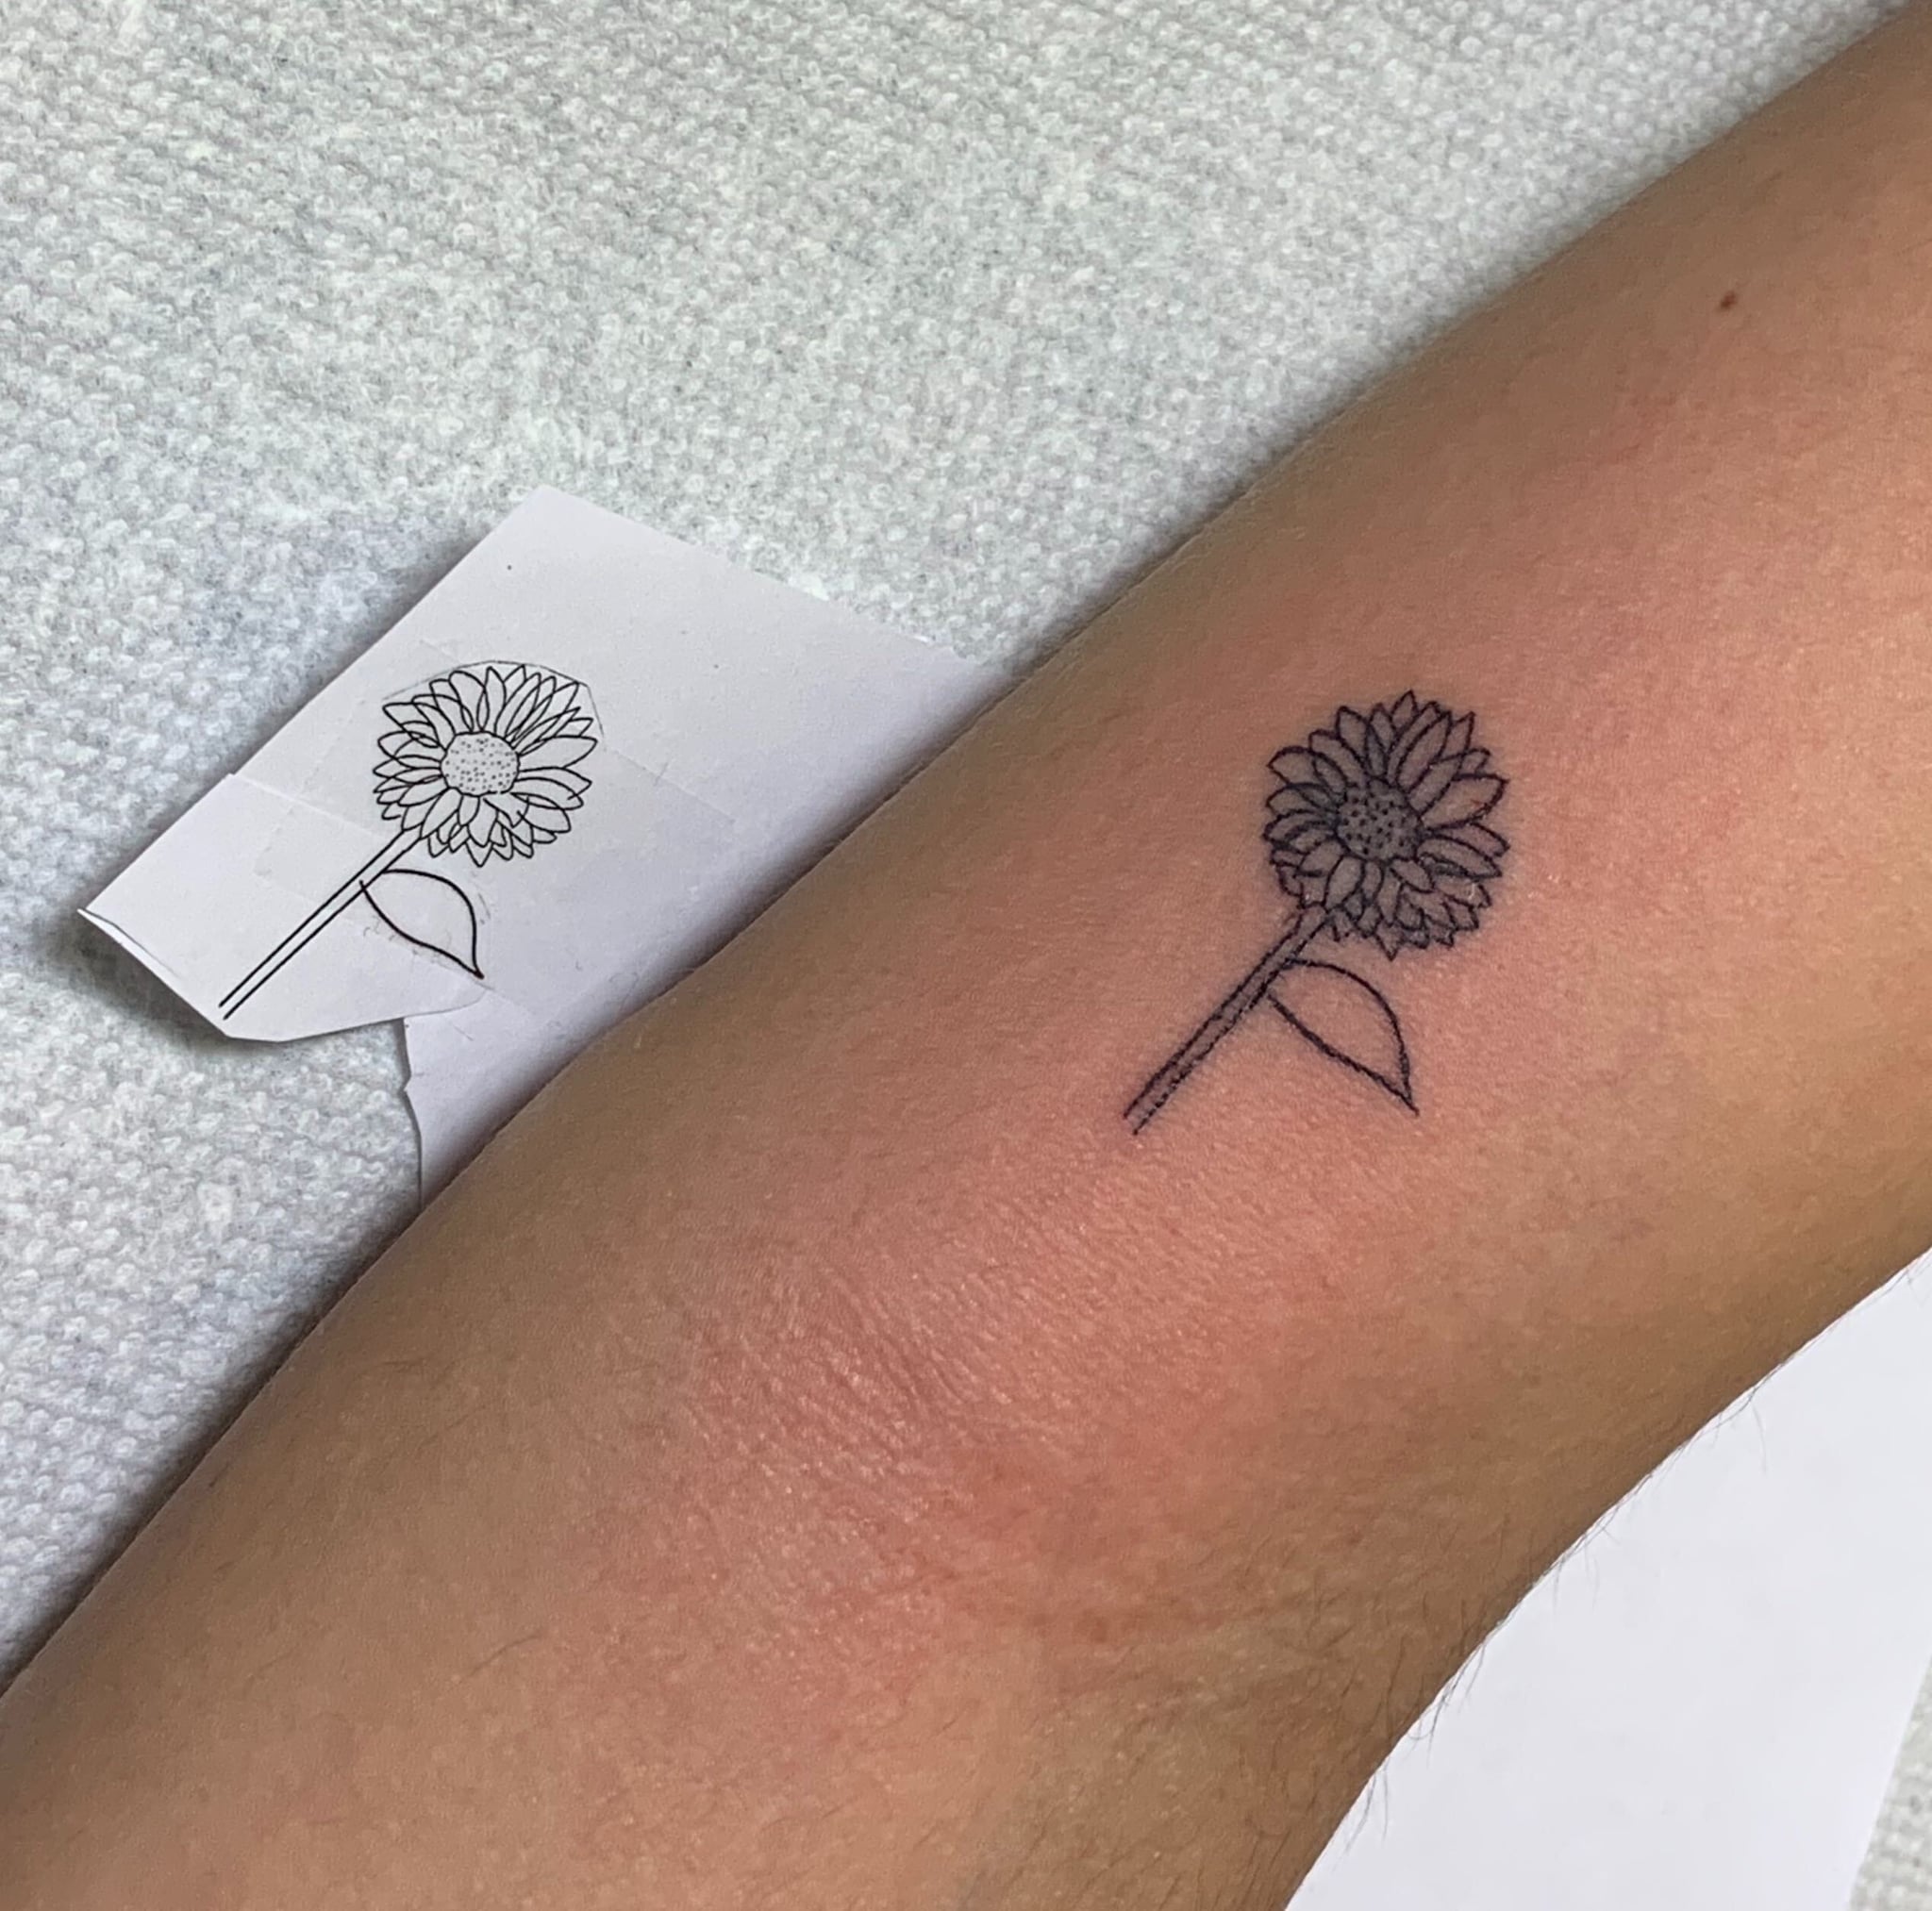 Sunflower Hand Tattoo Ideas for Women - FashionActivation